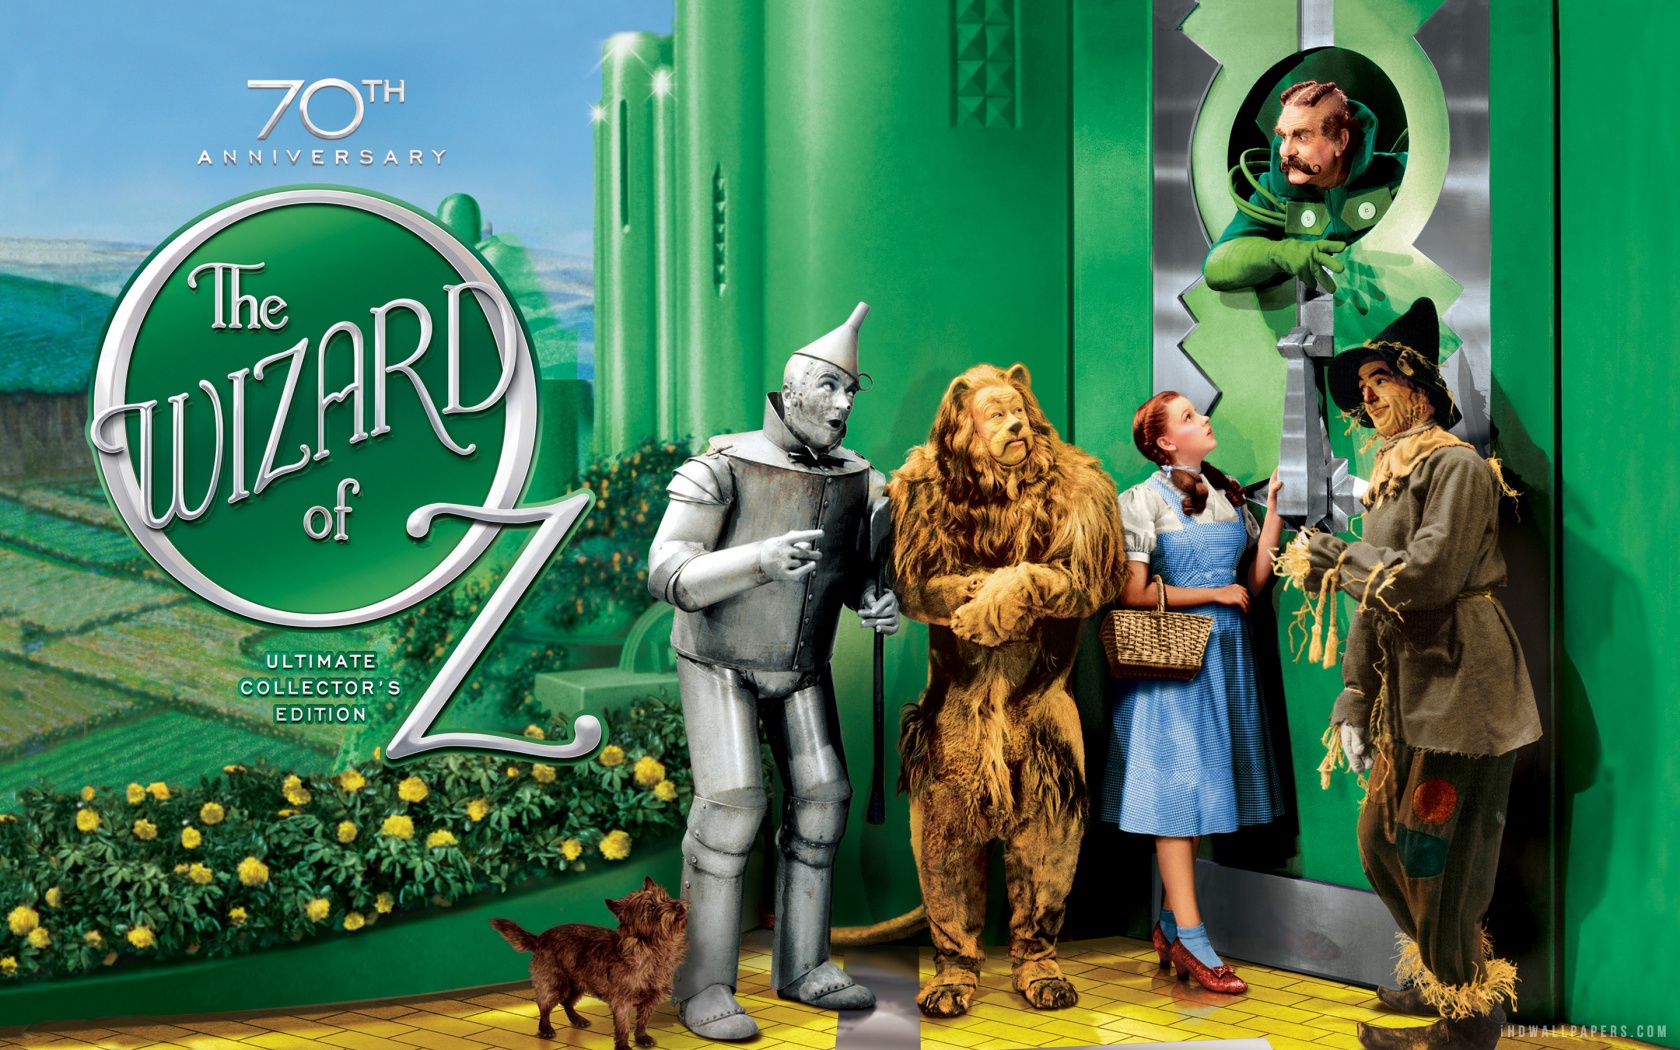 Free Wizard of Oz Wallpaper